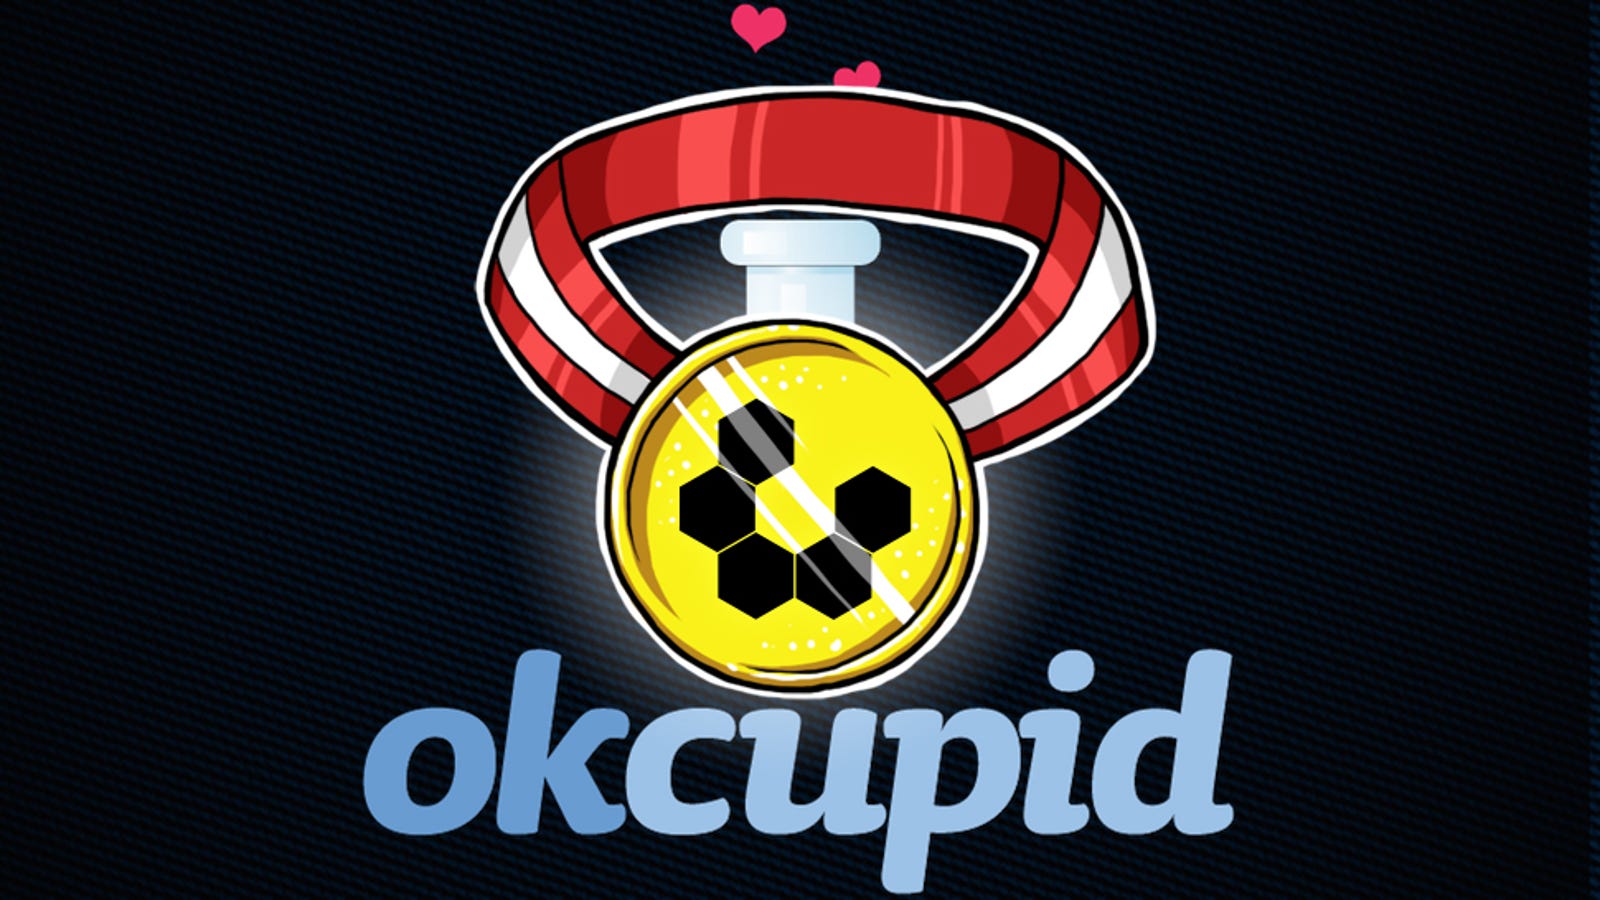 Online-dating-sites wie okcupid